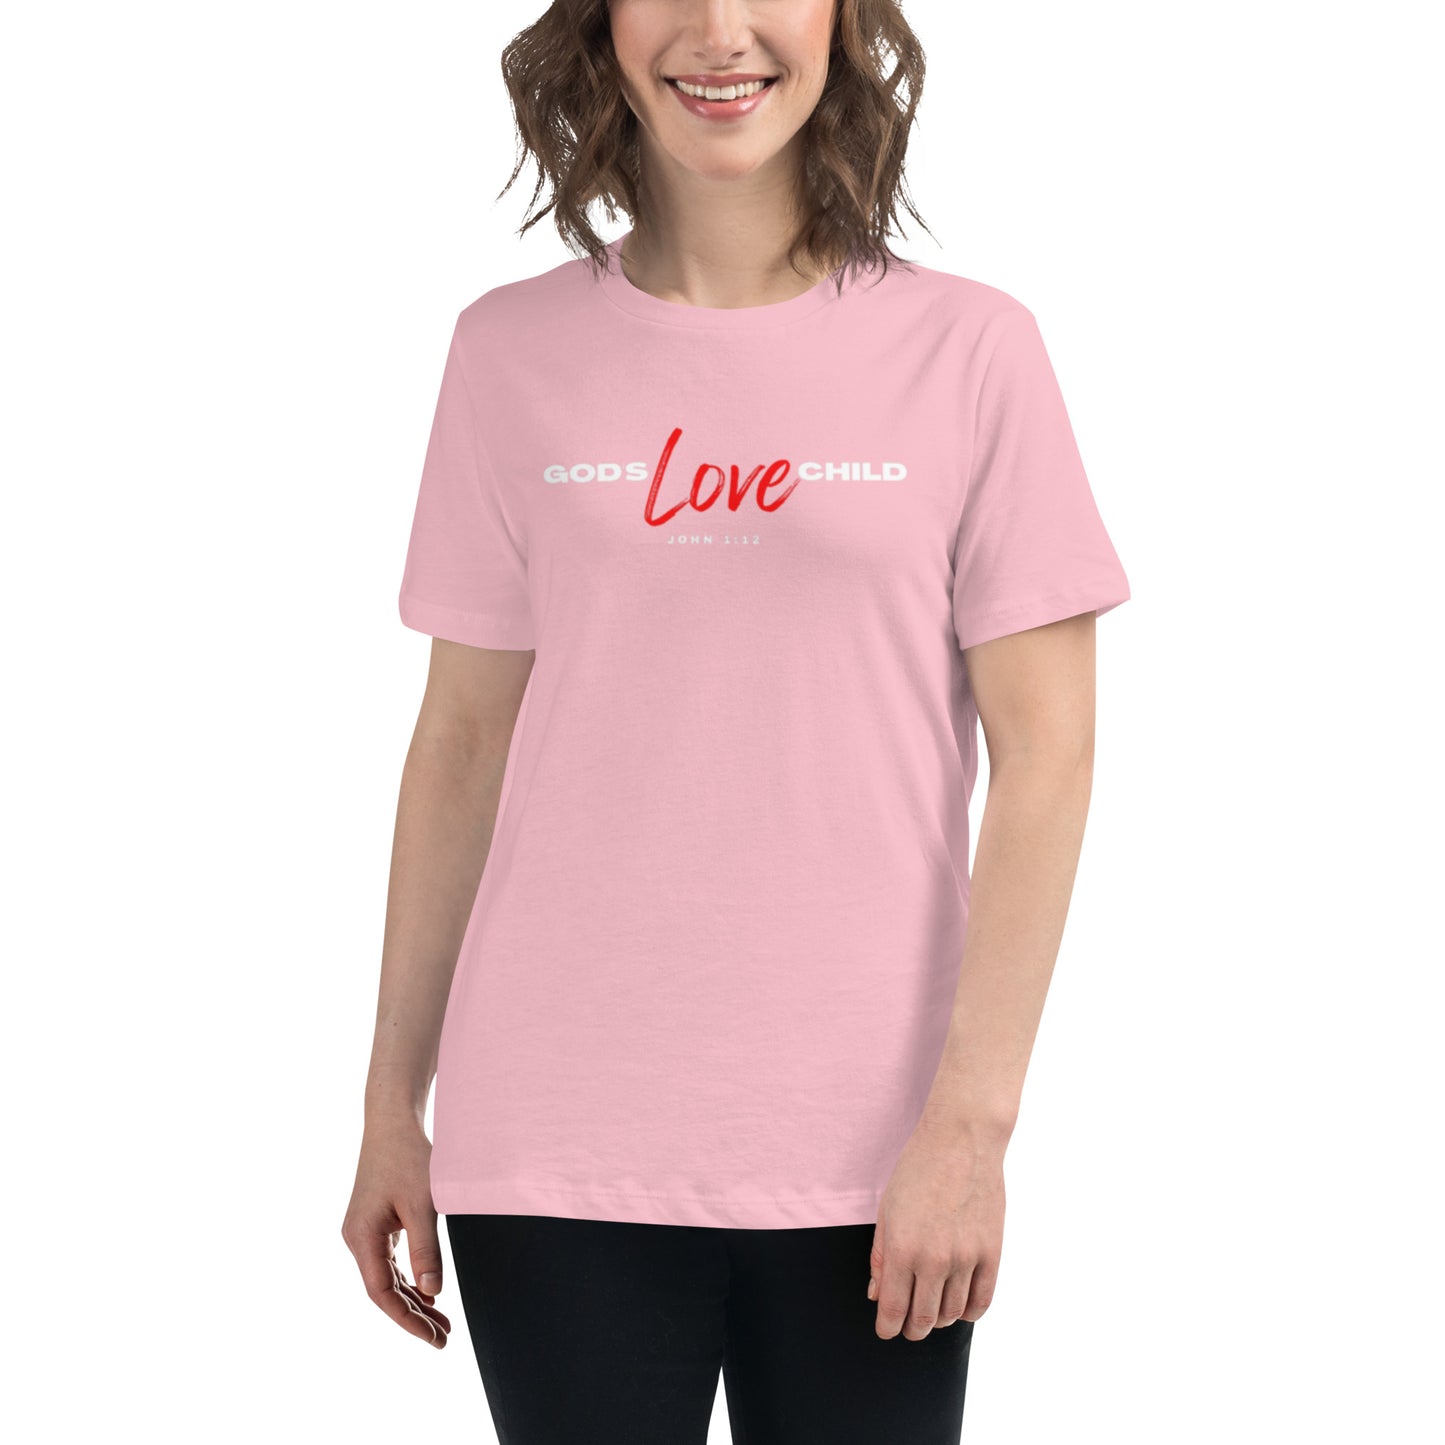 God's Love Child - Women's Relaxed T-Shirt